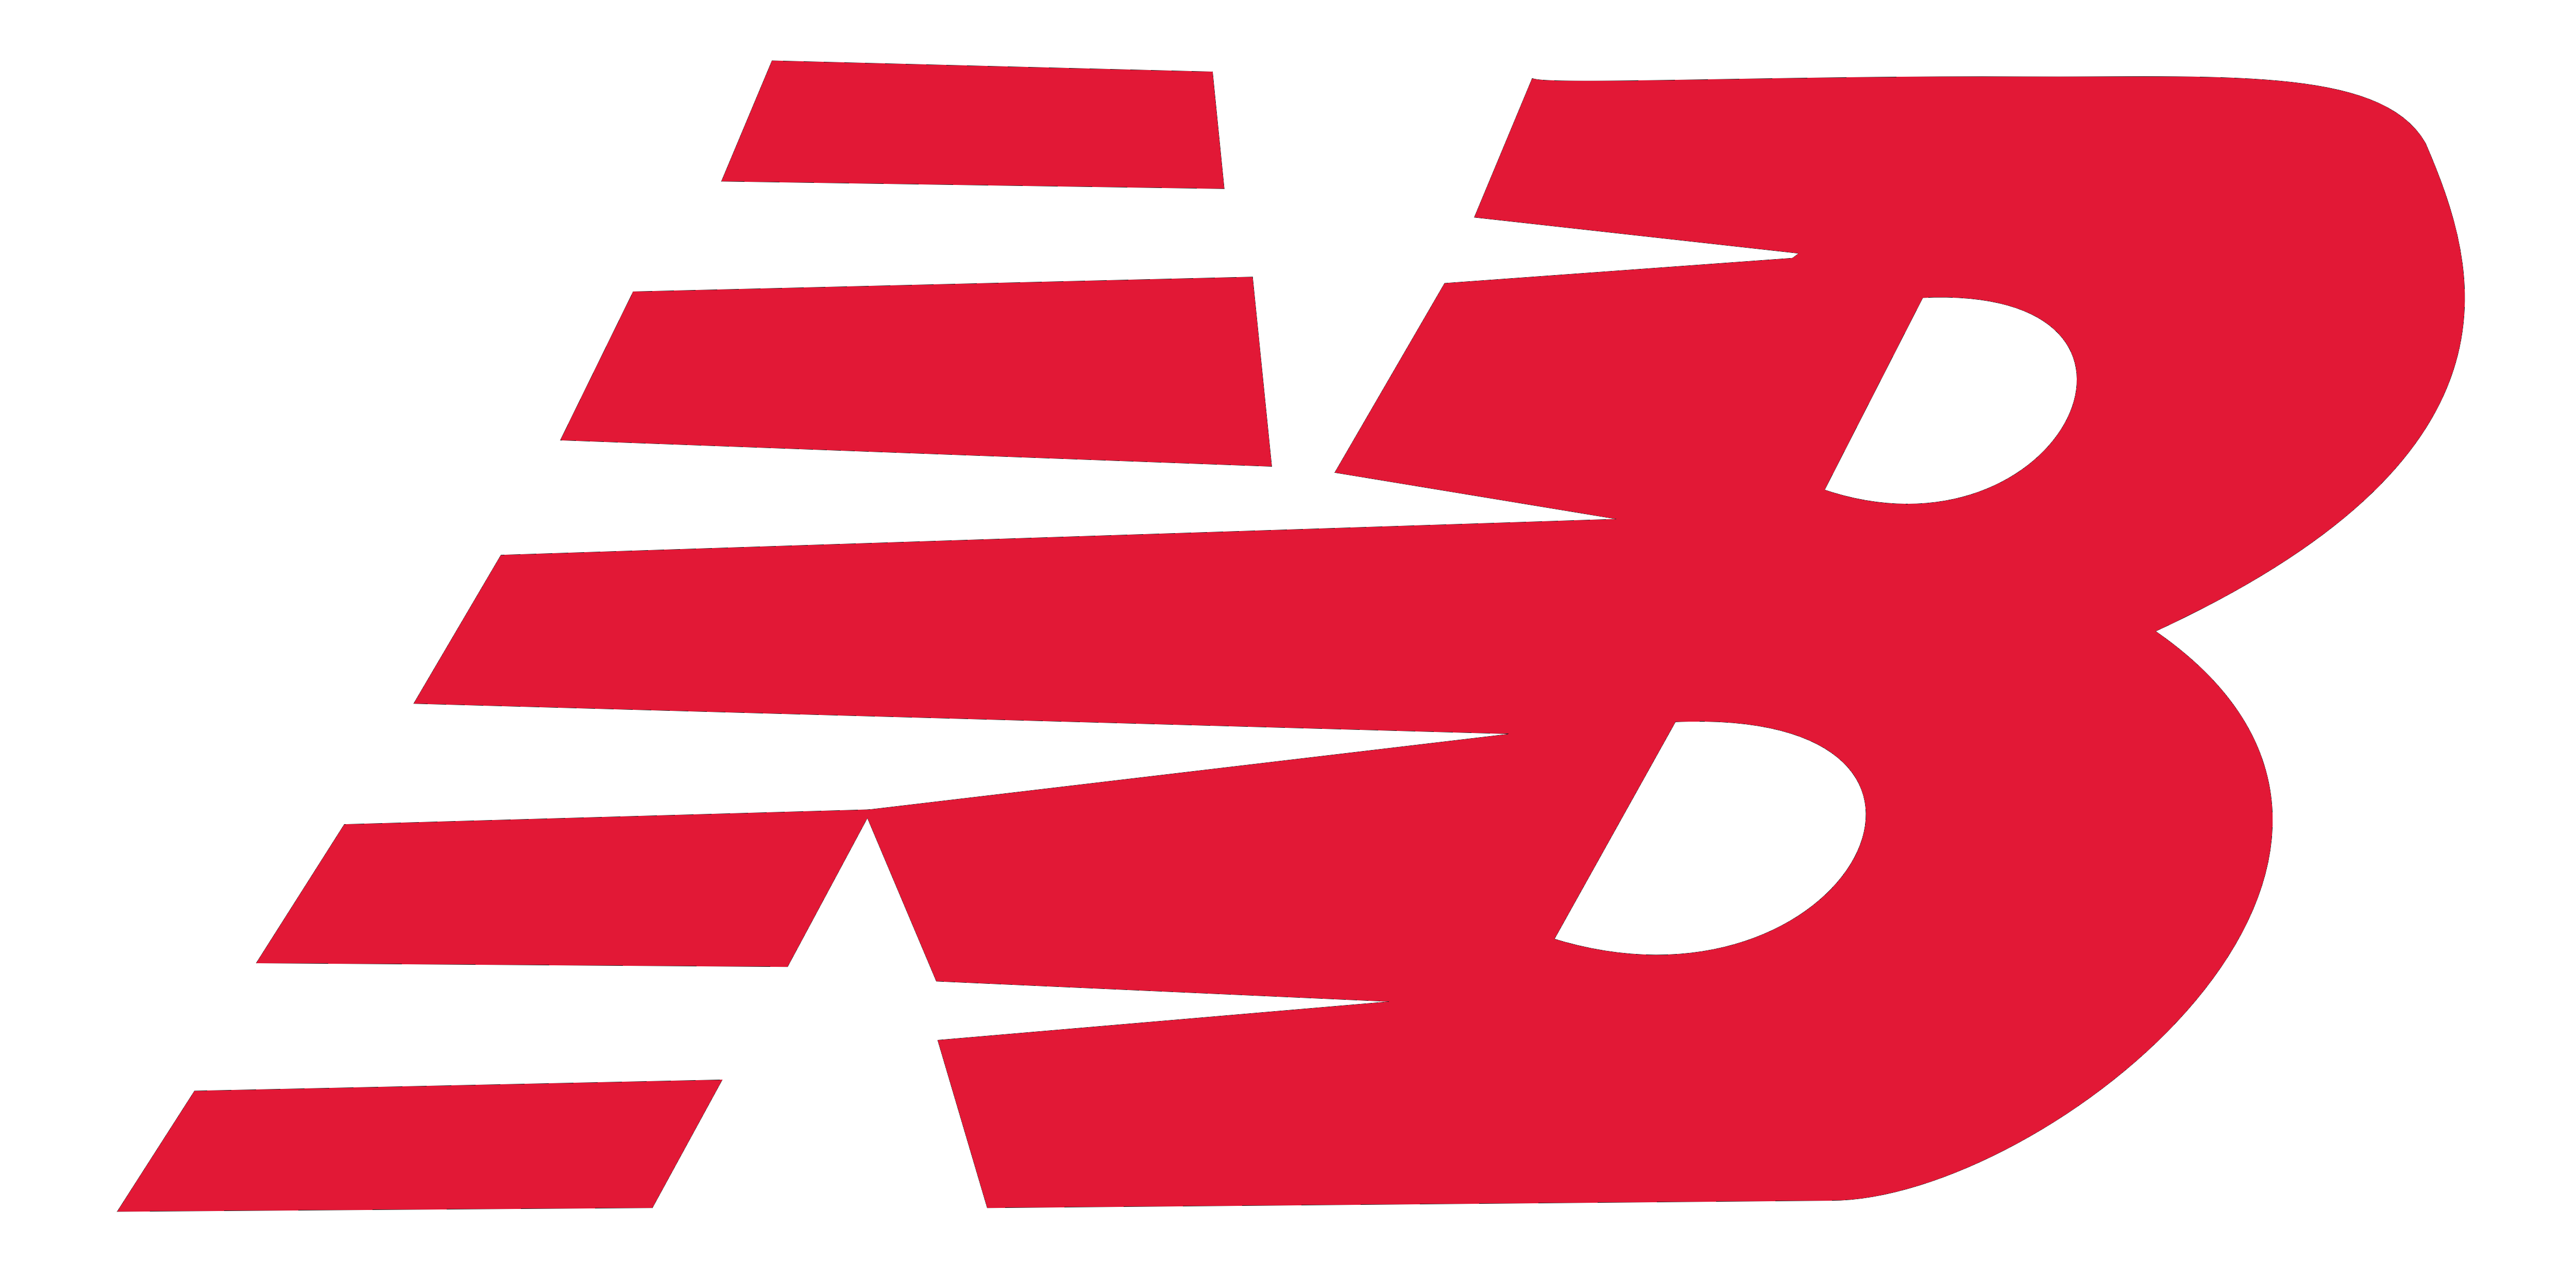 new balance red logo